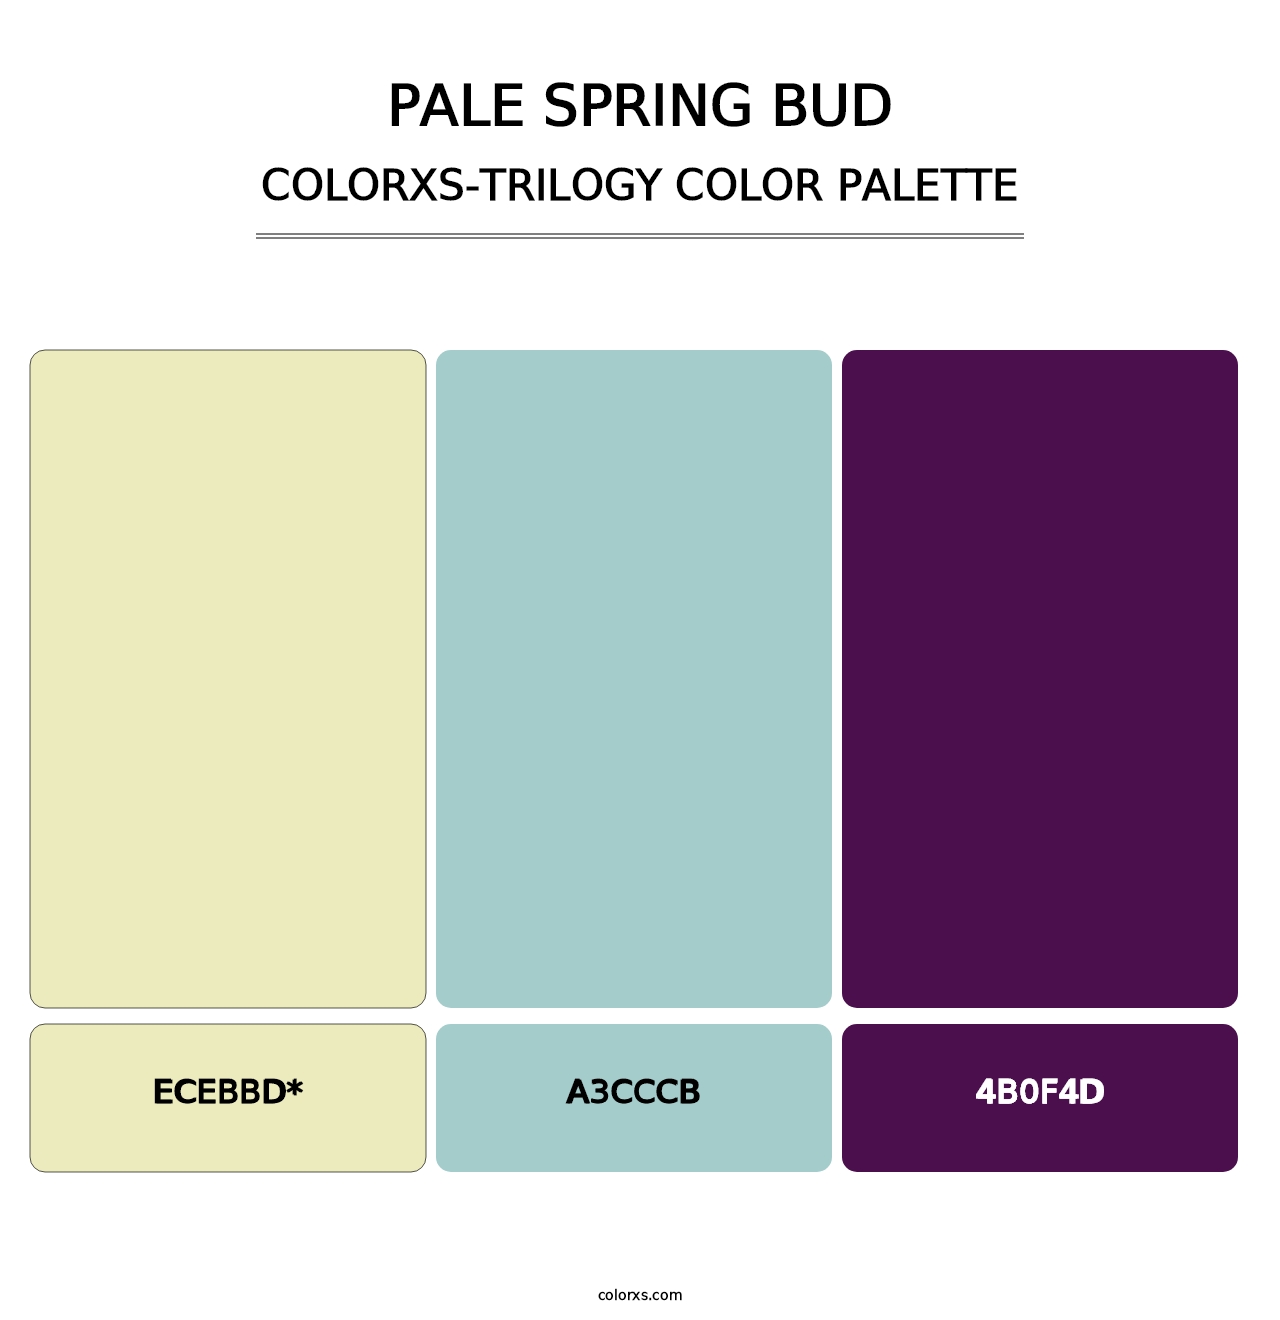 Pale Spring Bud - Colorxs Trilogy Palette